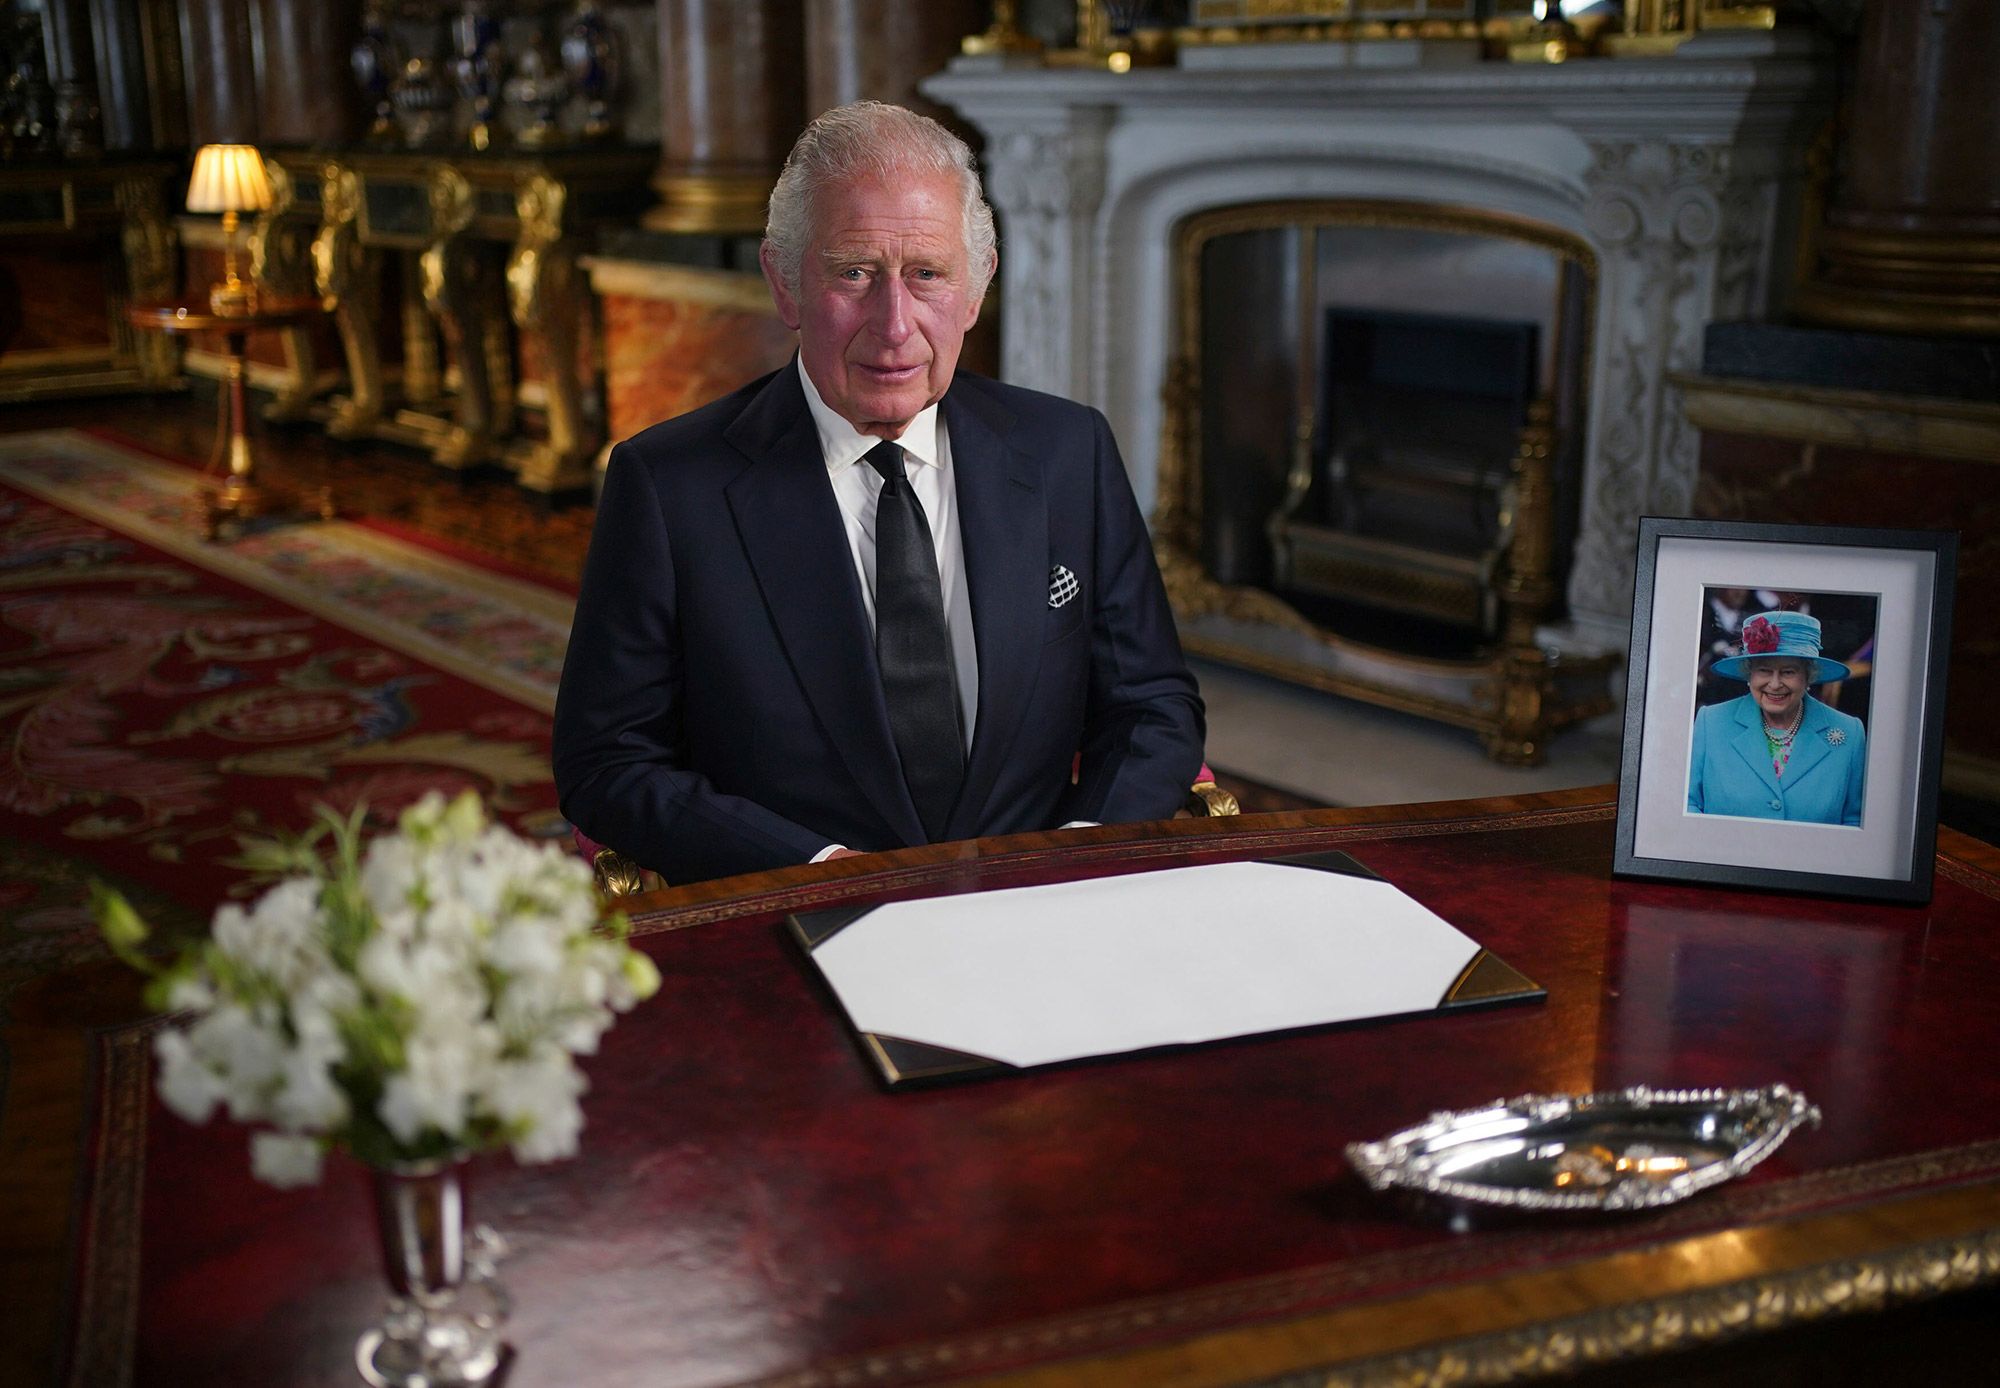 King Charles III, Sept 2022